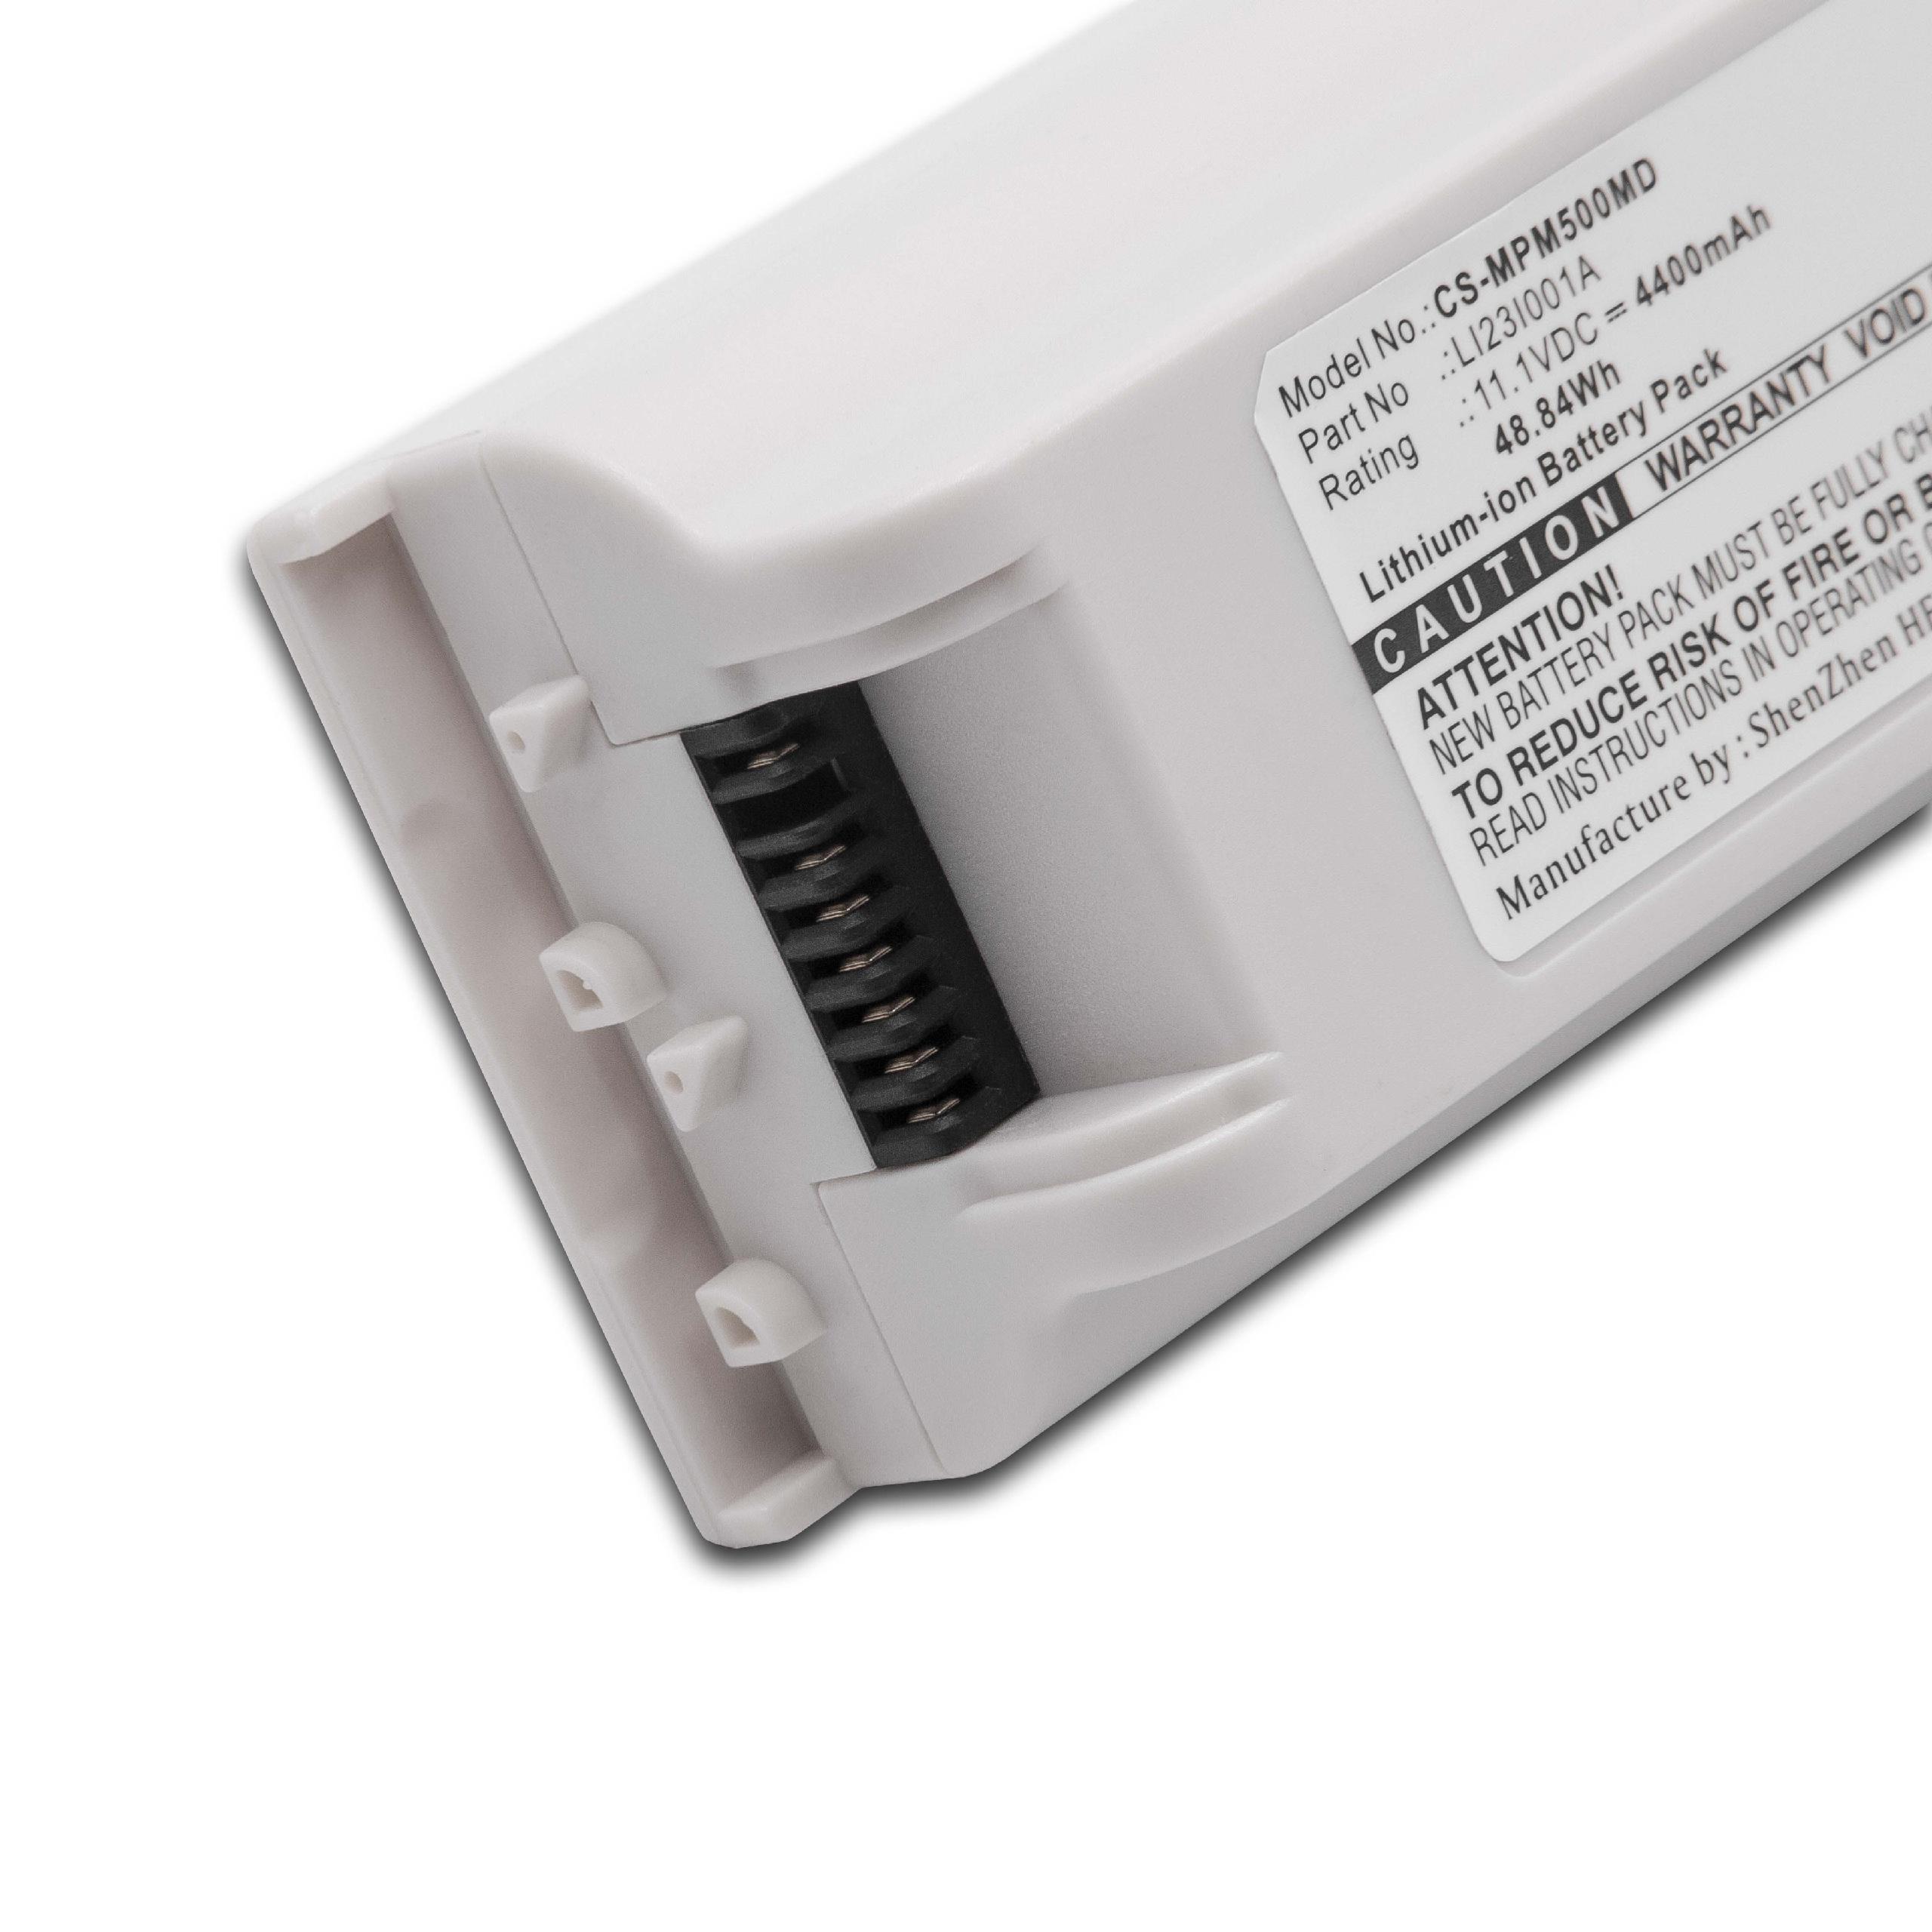 Medical Equipment Battery Replacement for Mindray LI23I001A, 2108-30-66176 - 4400mAh 11.1V Li-Ion